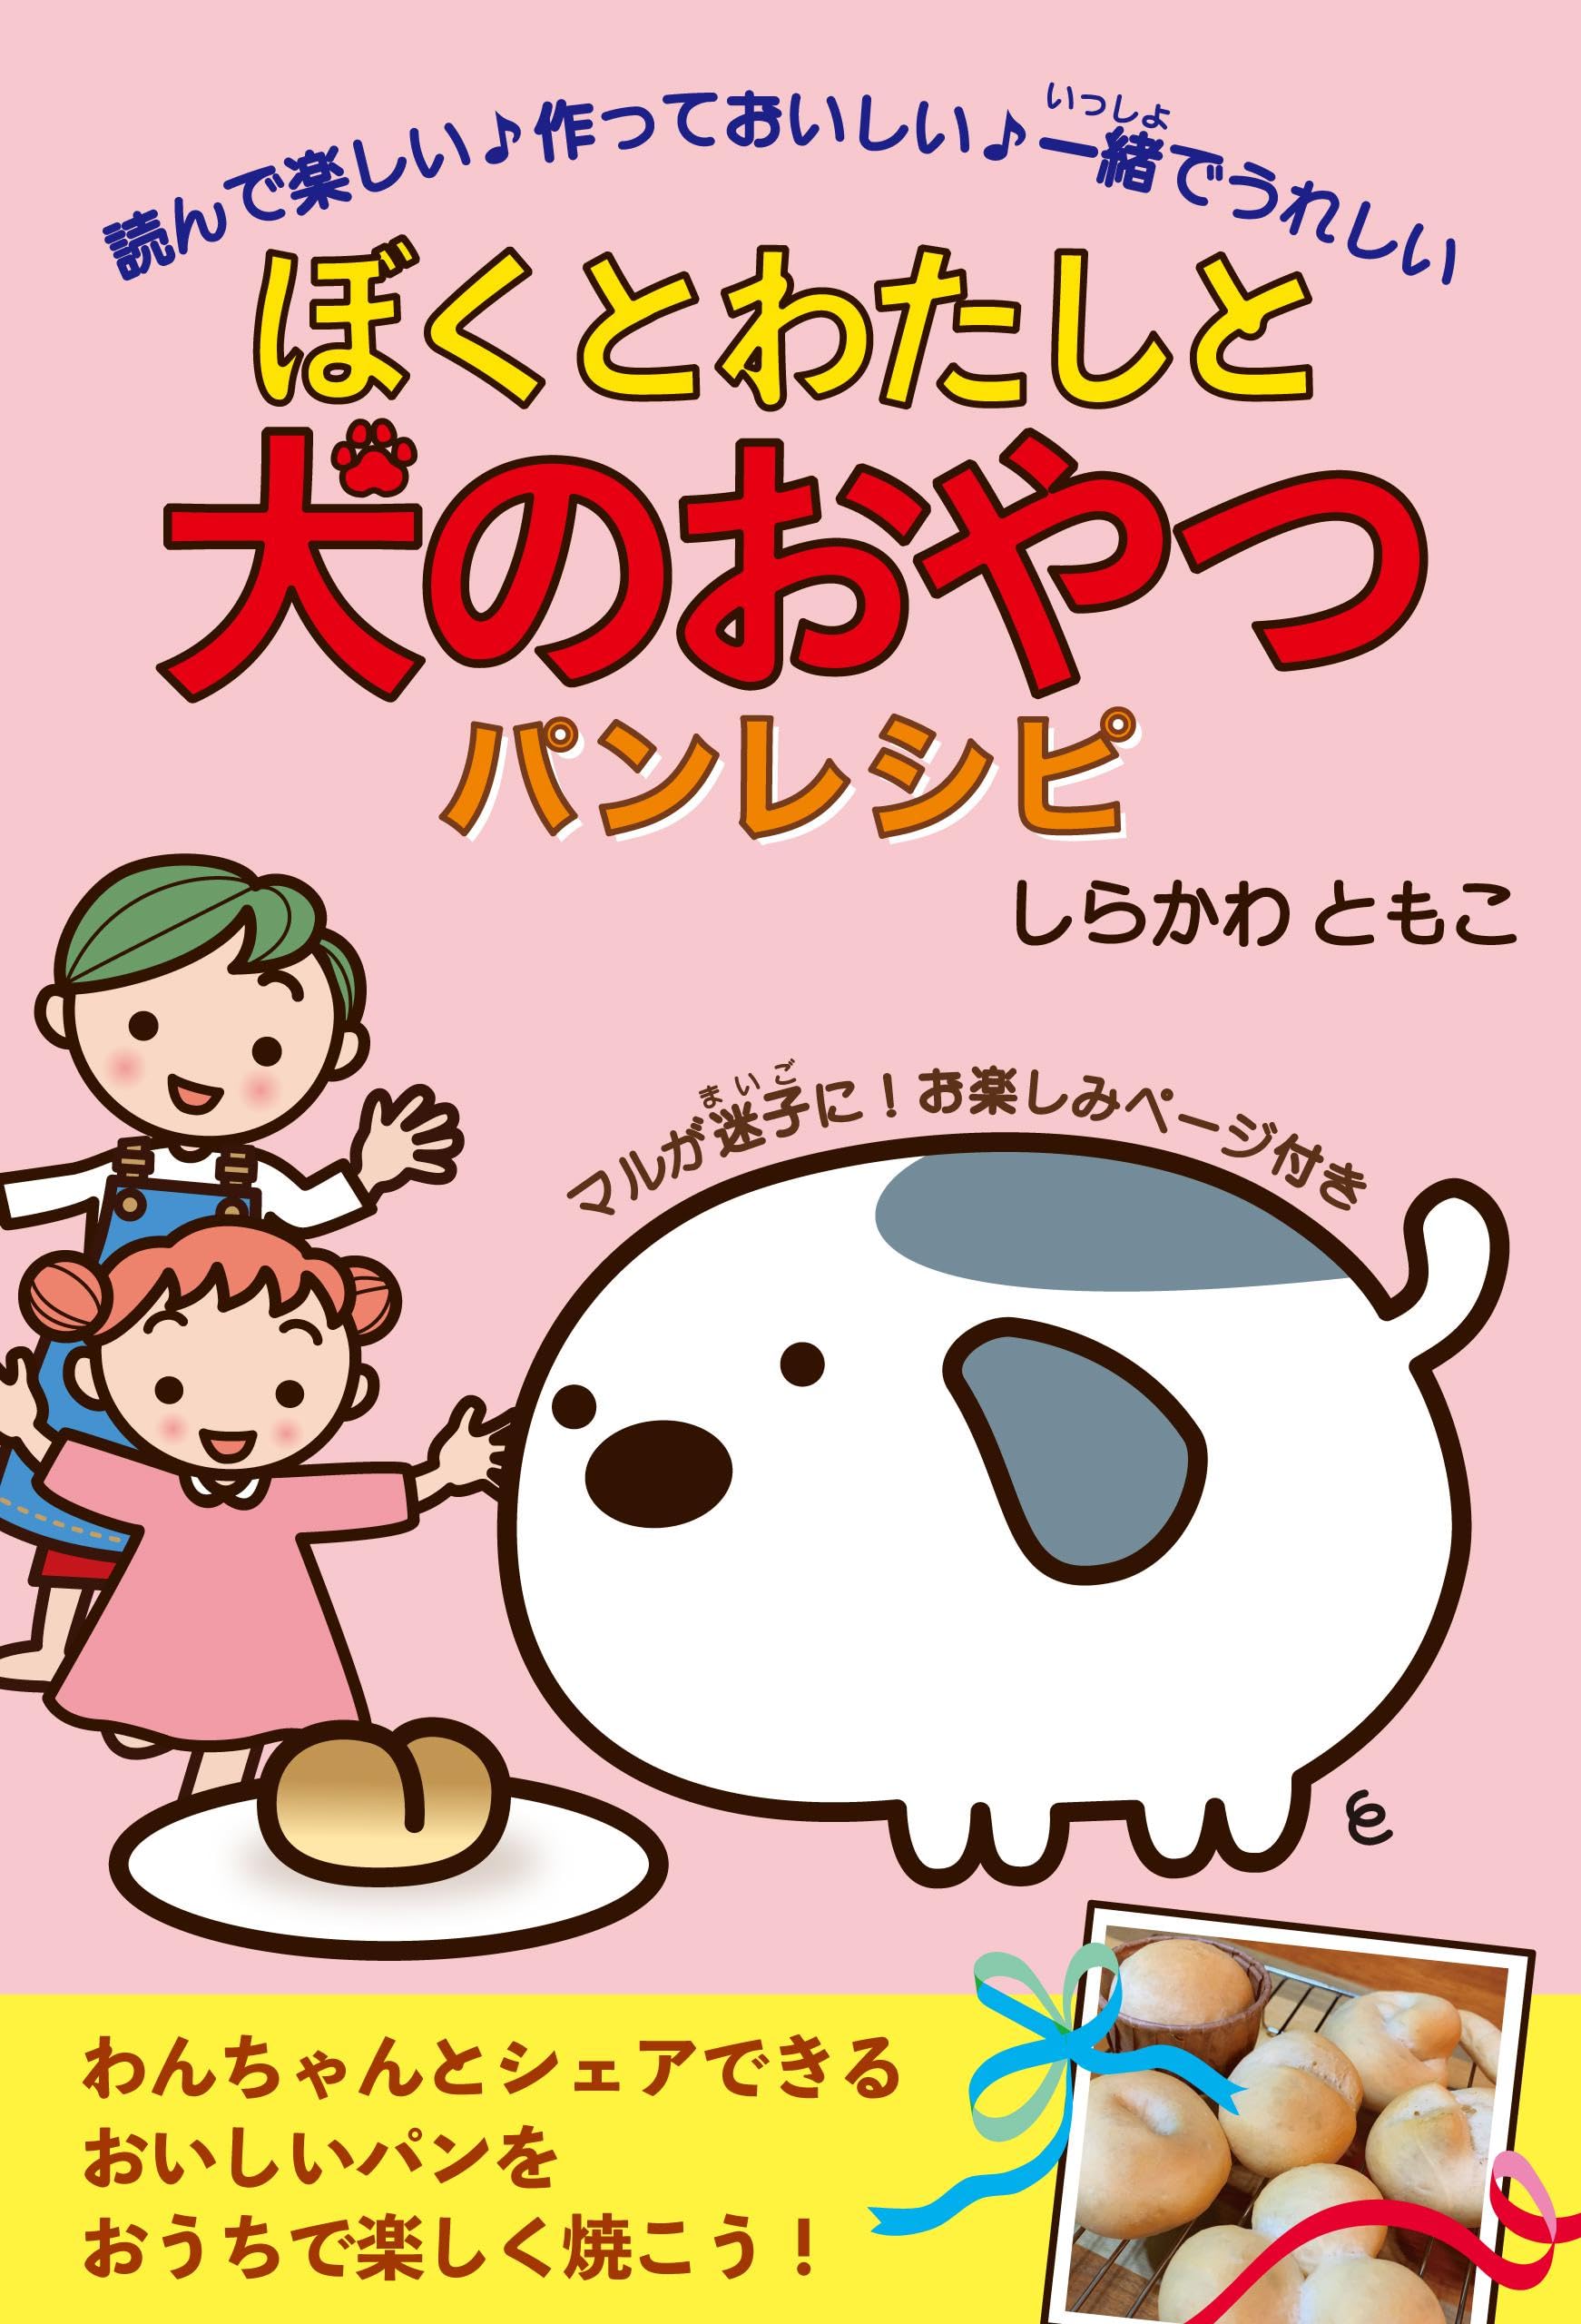 Bokuto Watashito Inu no Oyatsu Bread Recipe: Additive-free preservative-free handmade bread recipe picture book that you can share with your dog Boku to watasi to inu no oyatu (Japanese Edition)